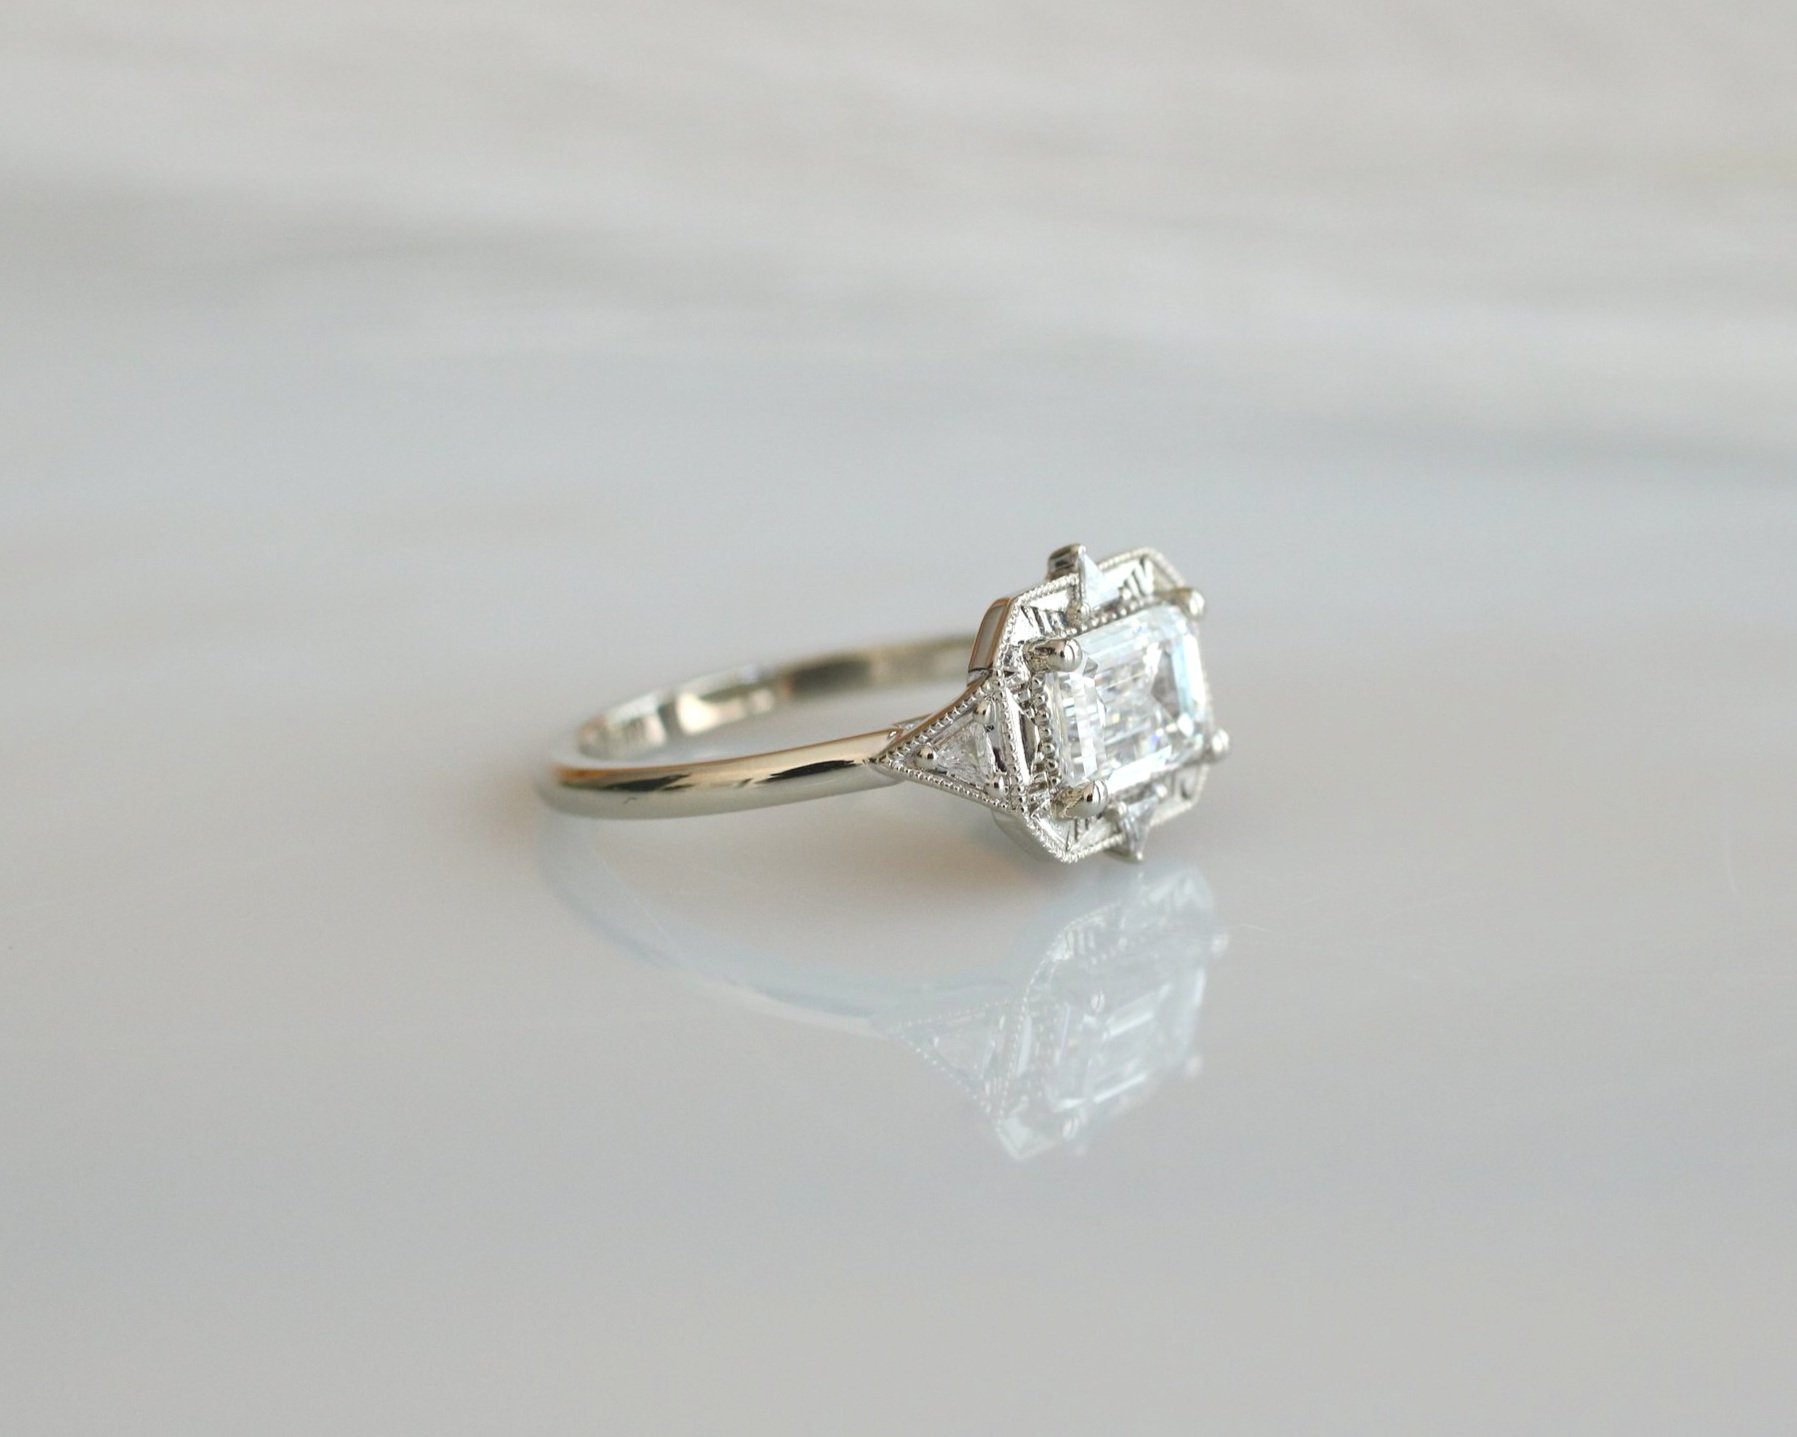 Dorna engagement ring - 1.13ct Emerald cut lab diamond + natural triangle diamonds + 14k white gold